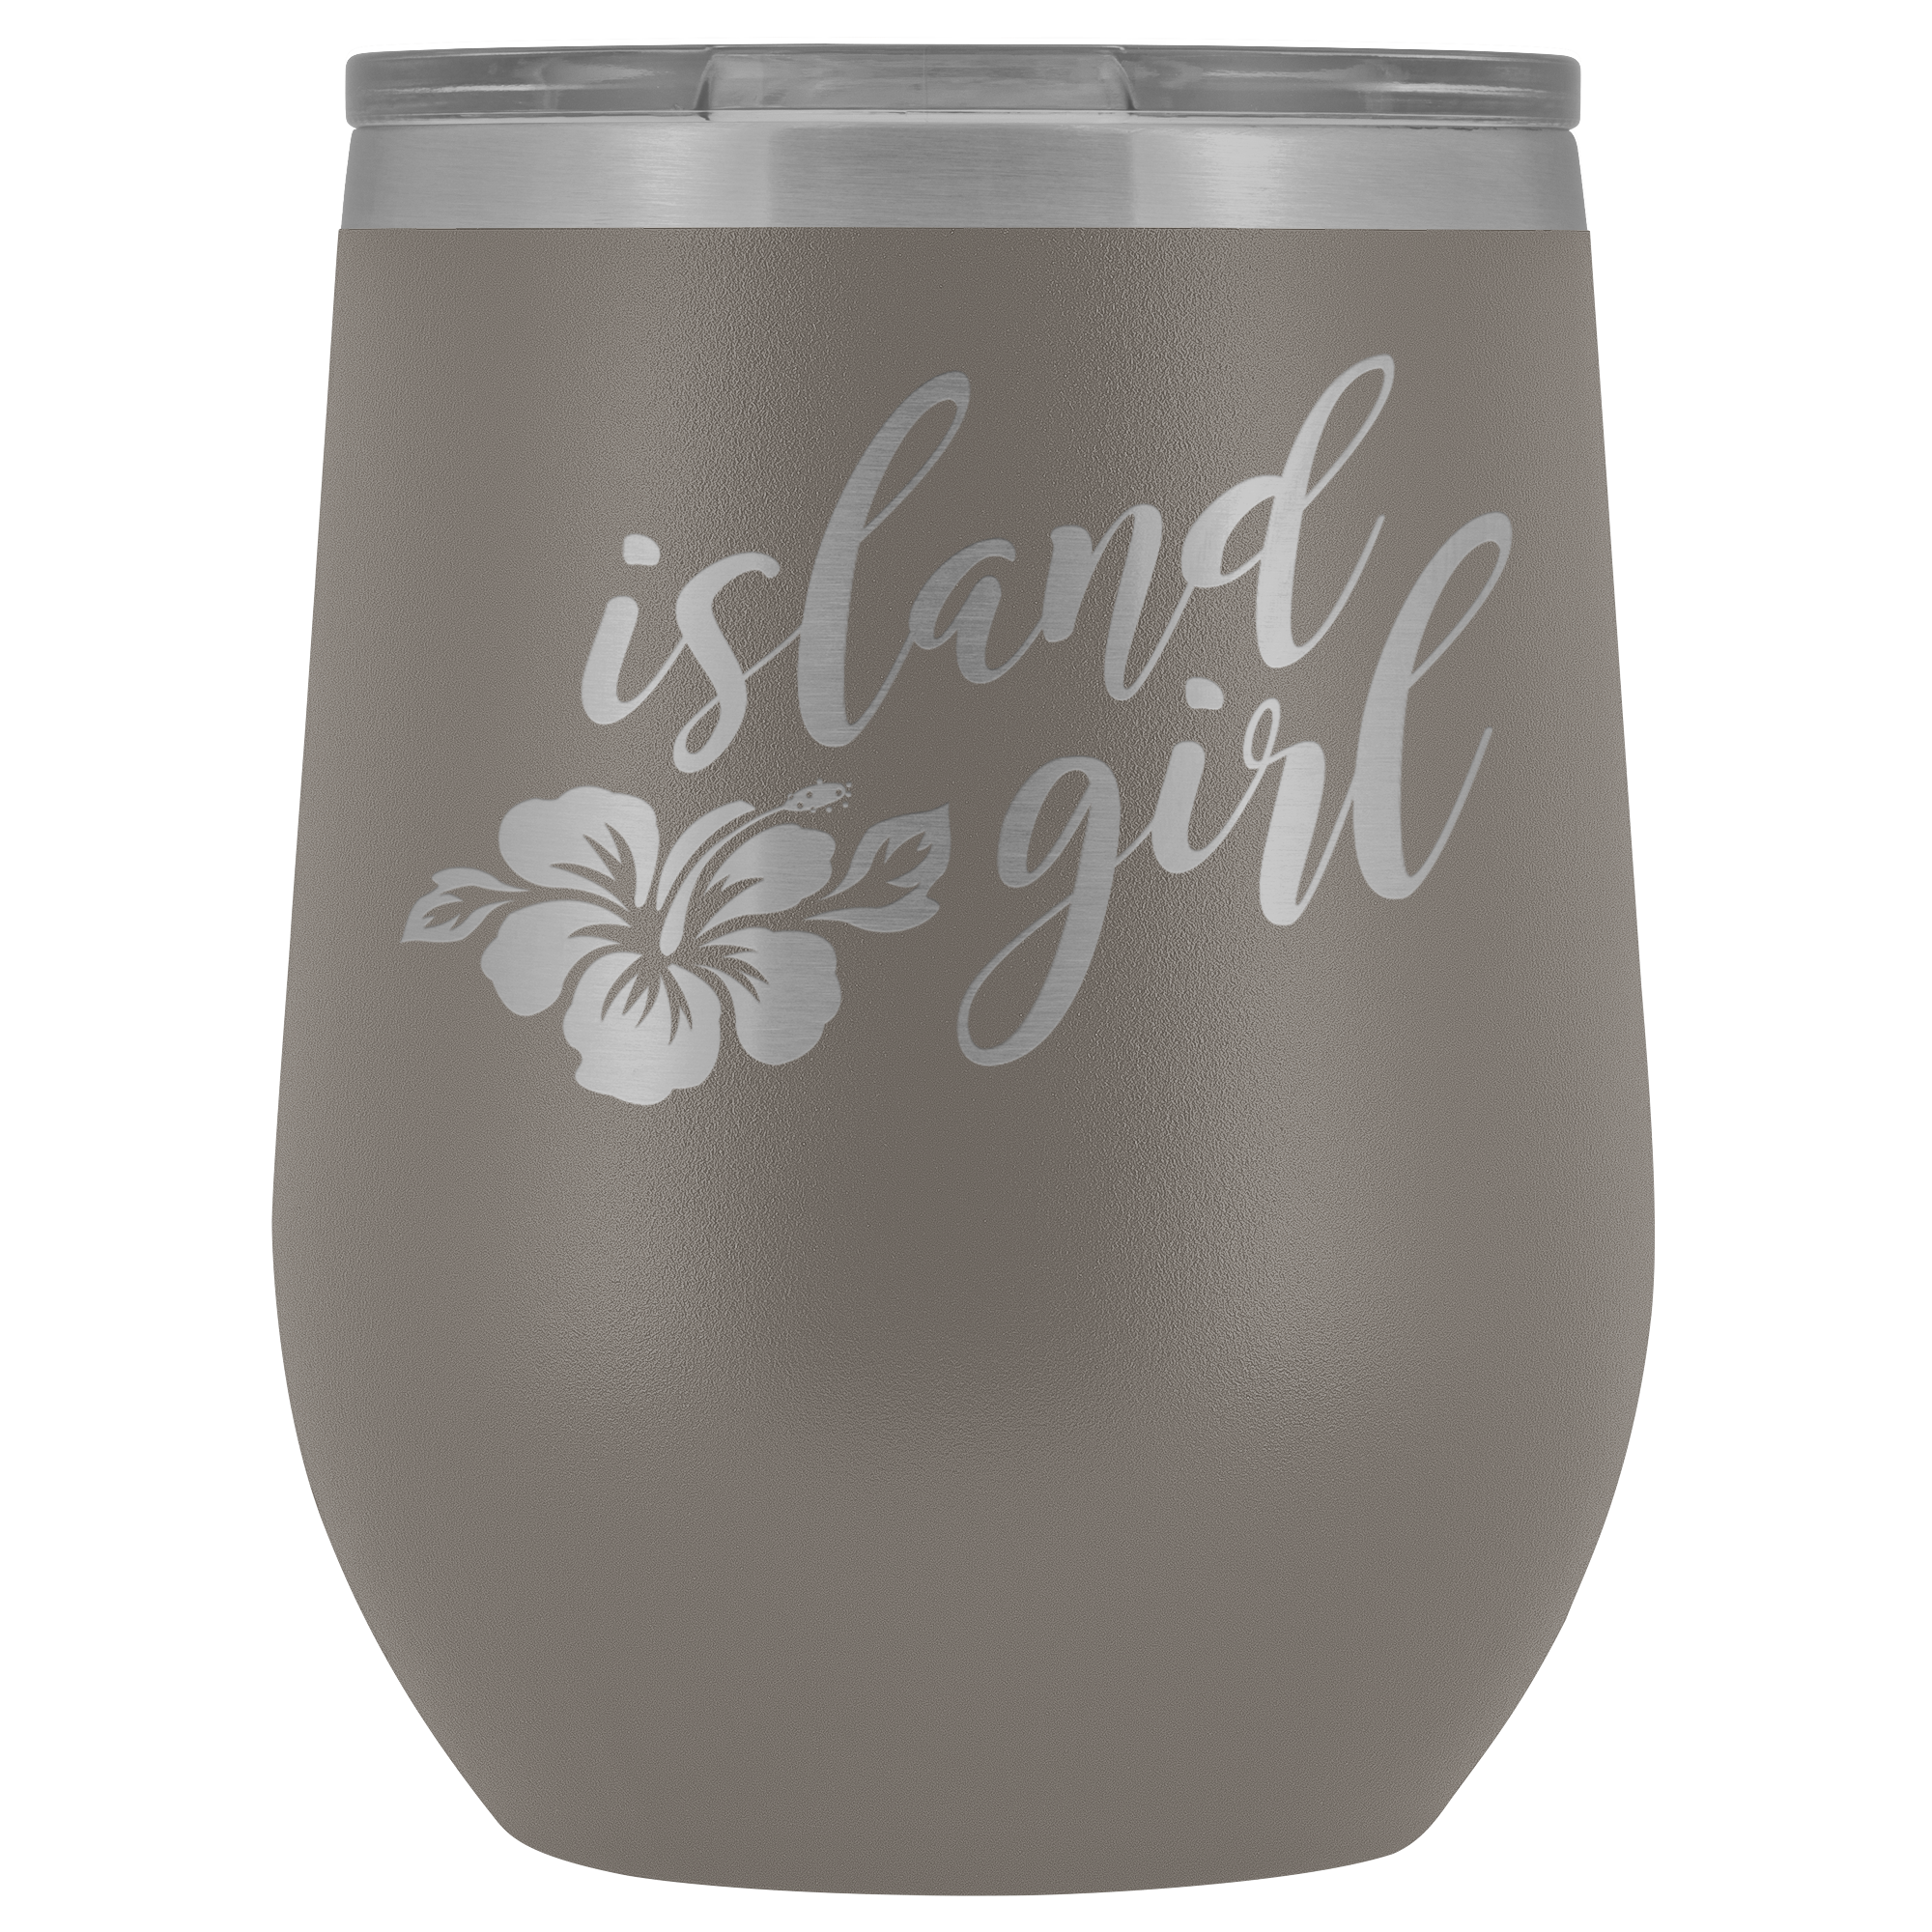 Island Girl Guam Saipan CNMI Wine Tumbler